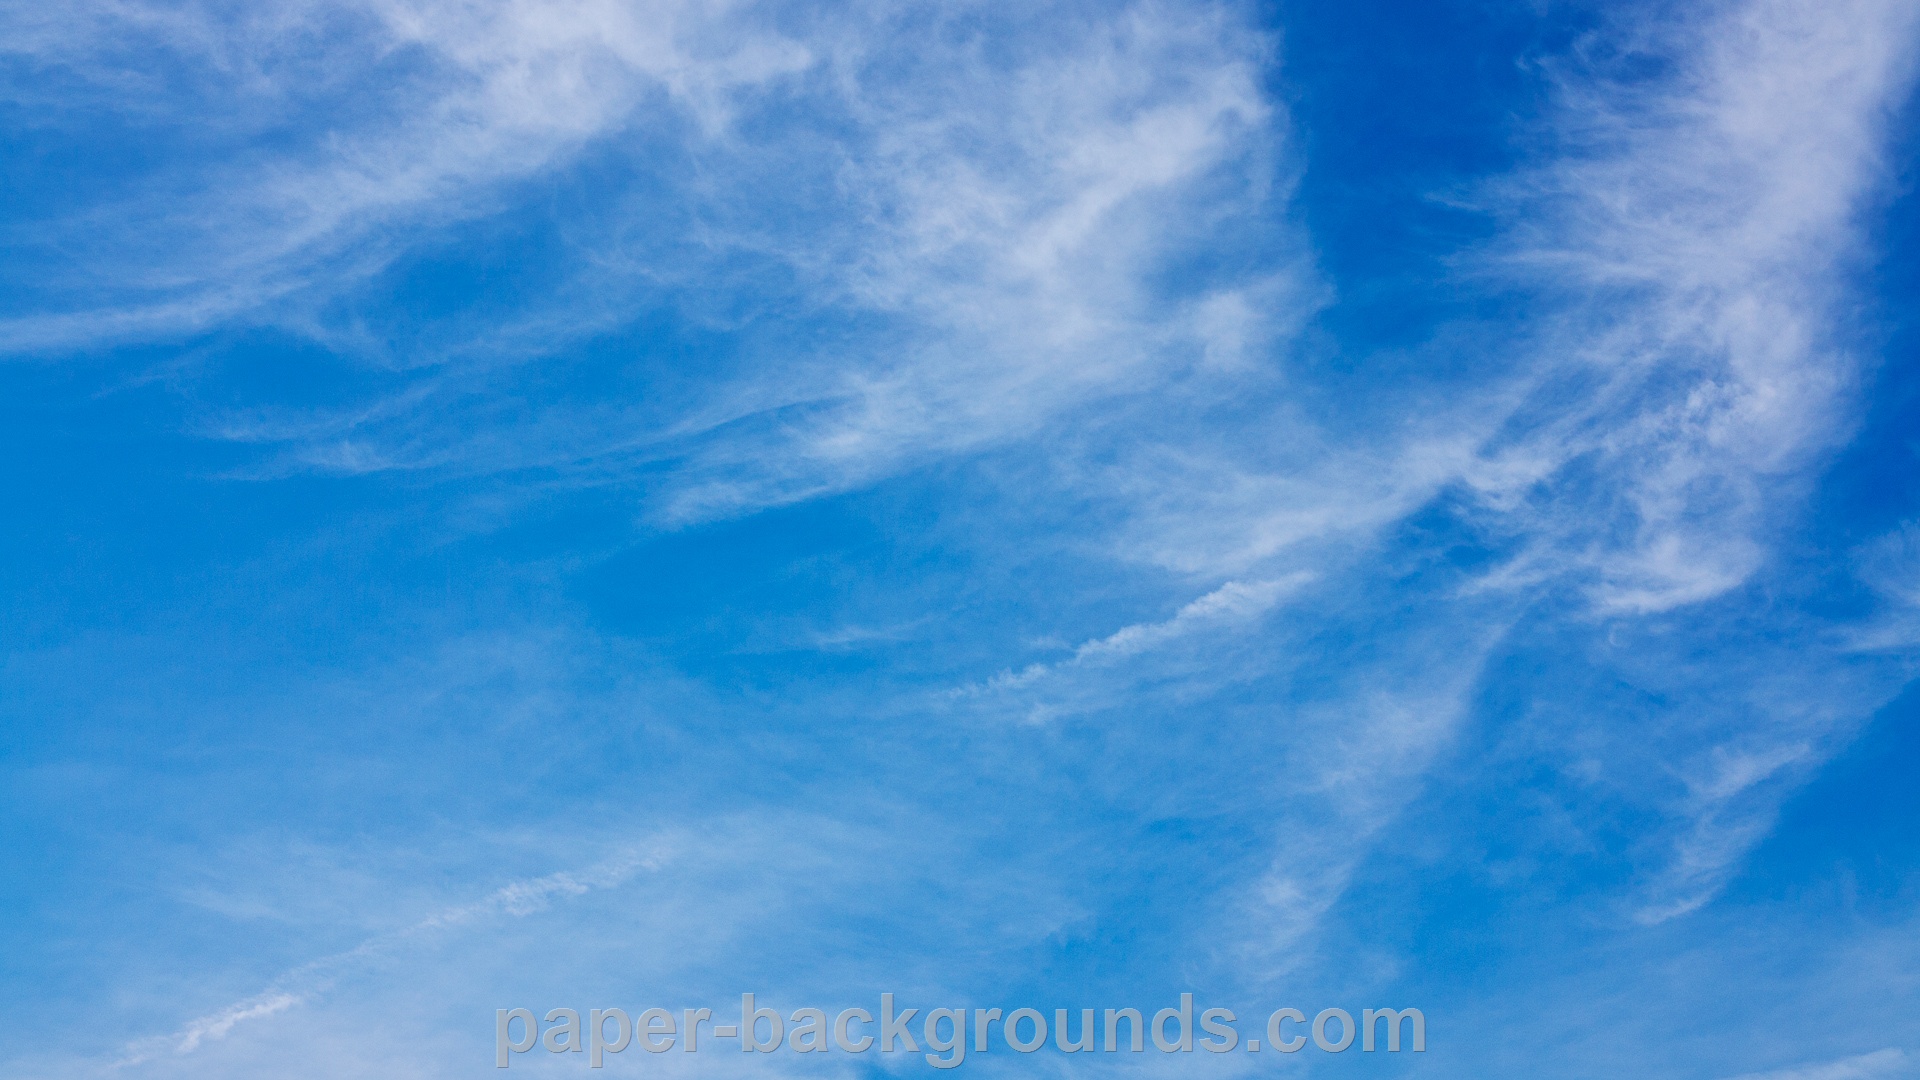 Sky Background Images - WallpaperSafari